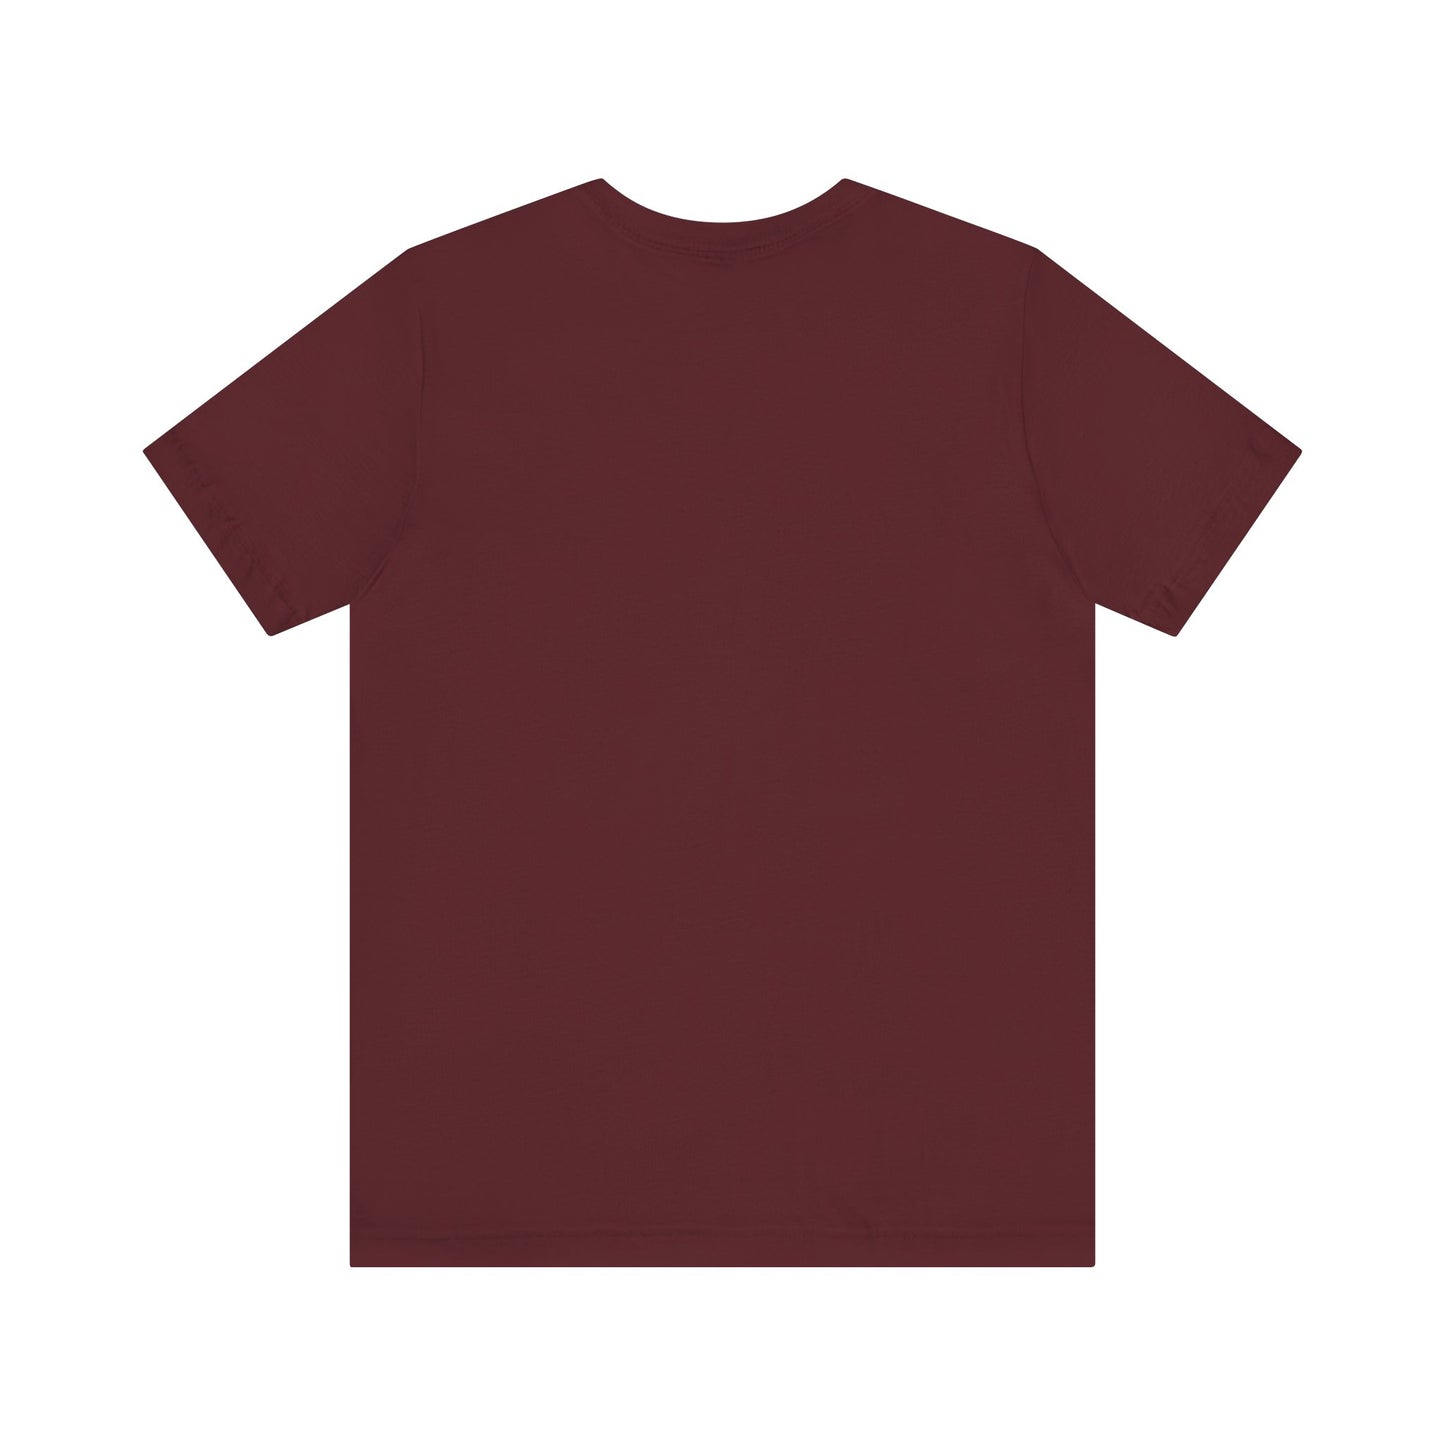 Maroon - Unisex Jersey Short Sleeve T Shirt - Burgundy Royal T